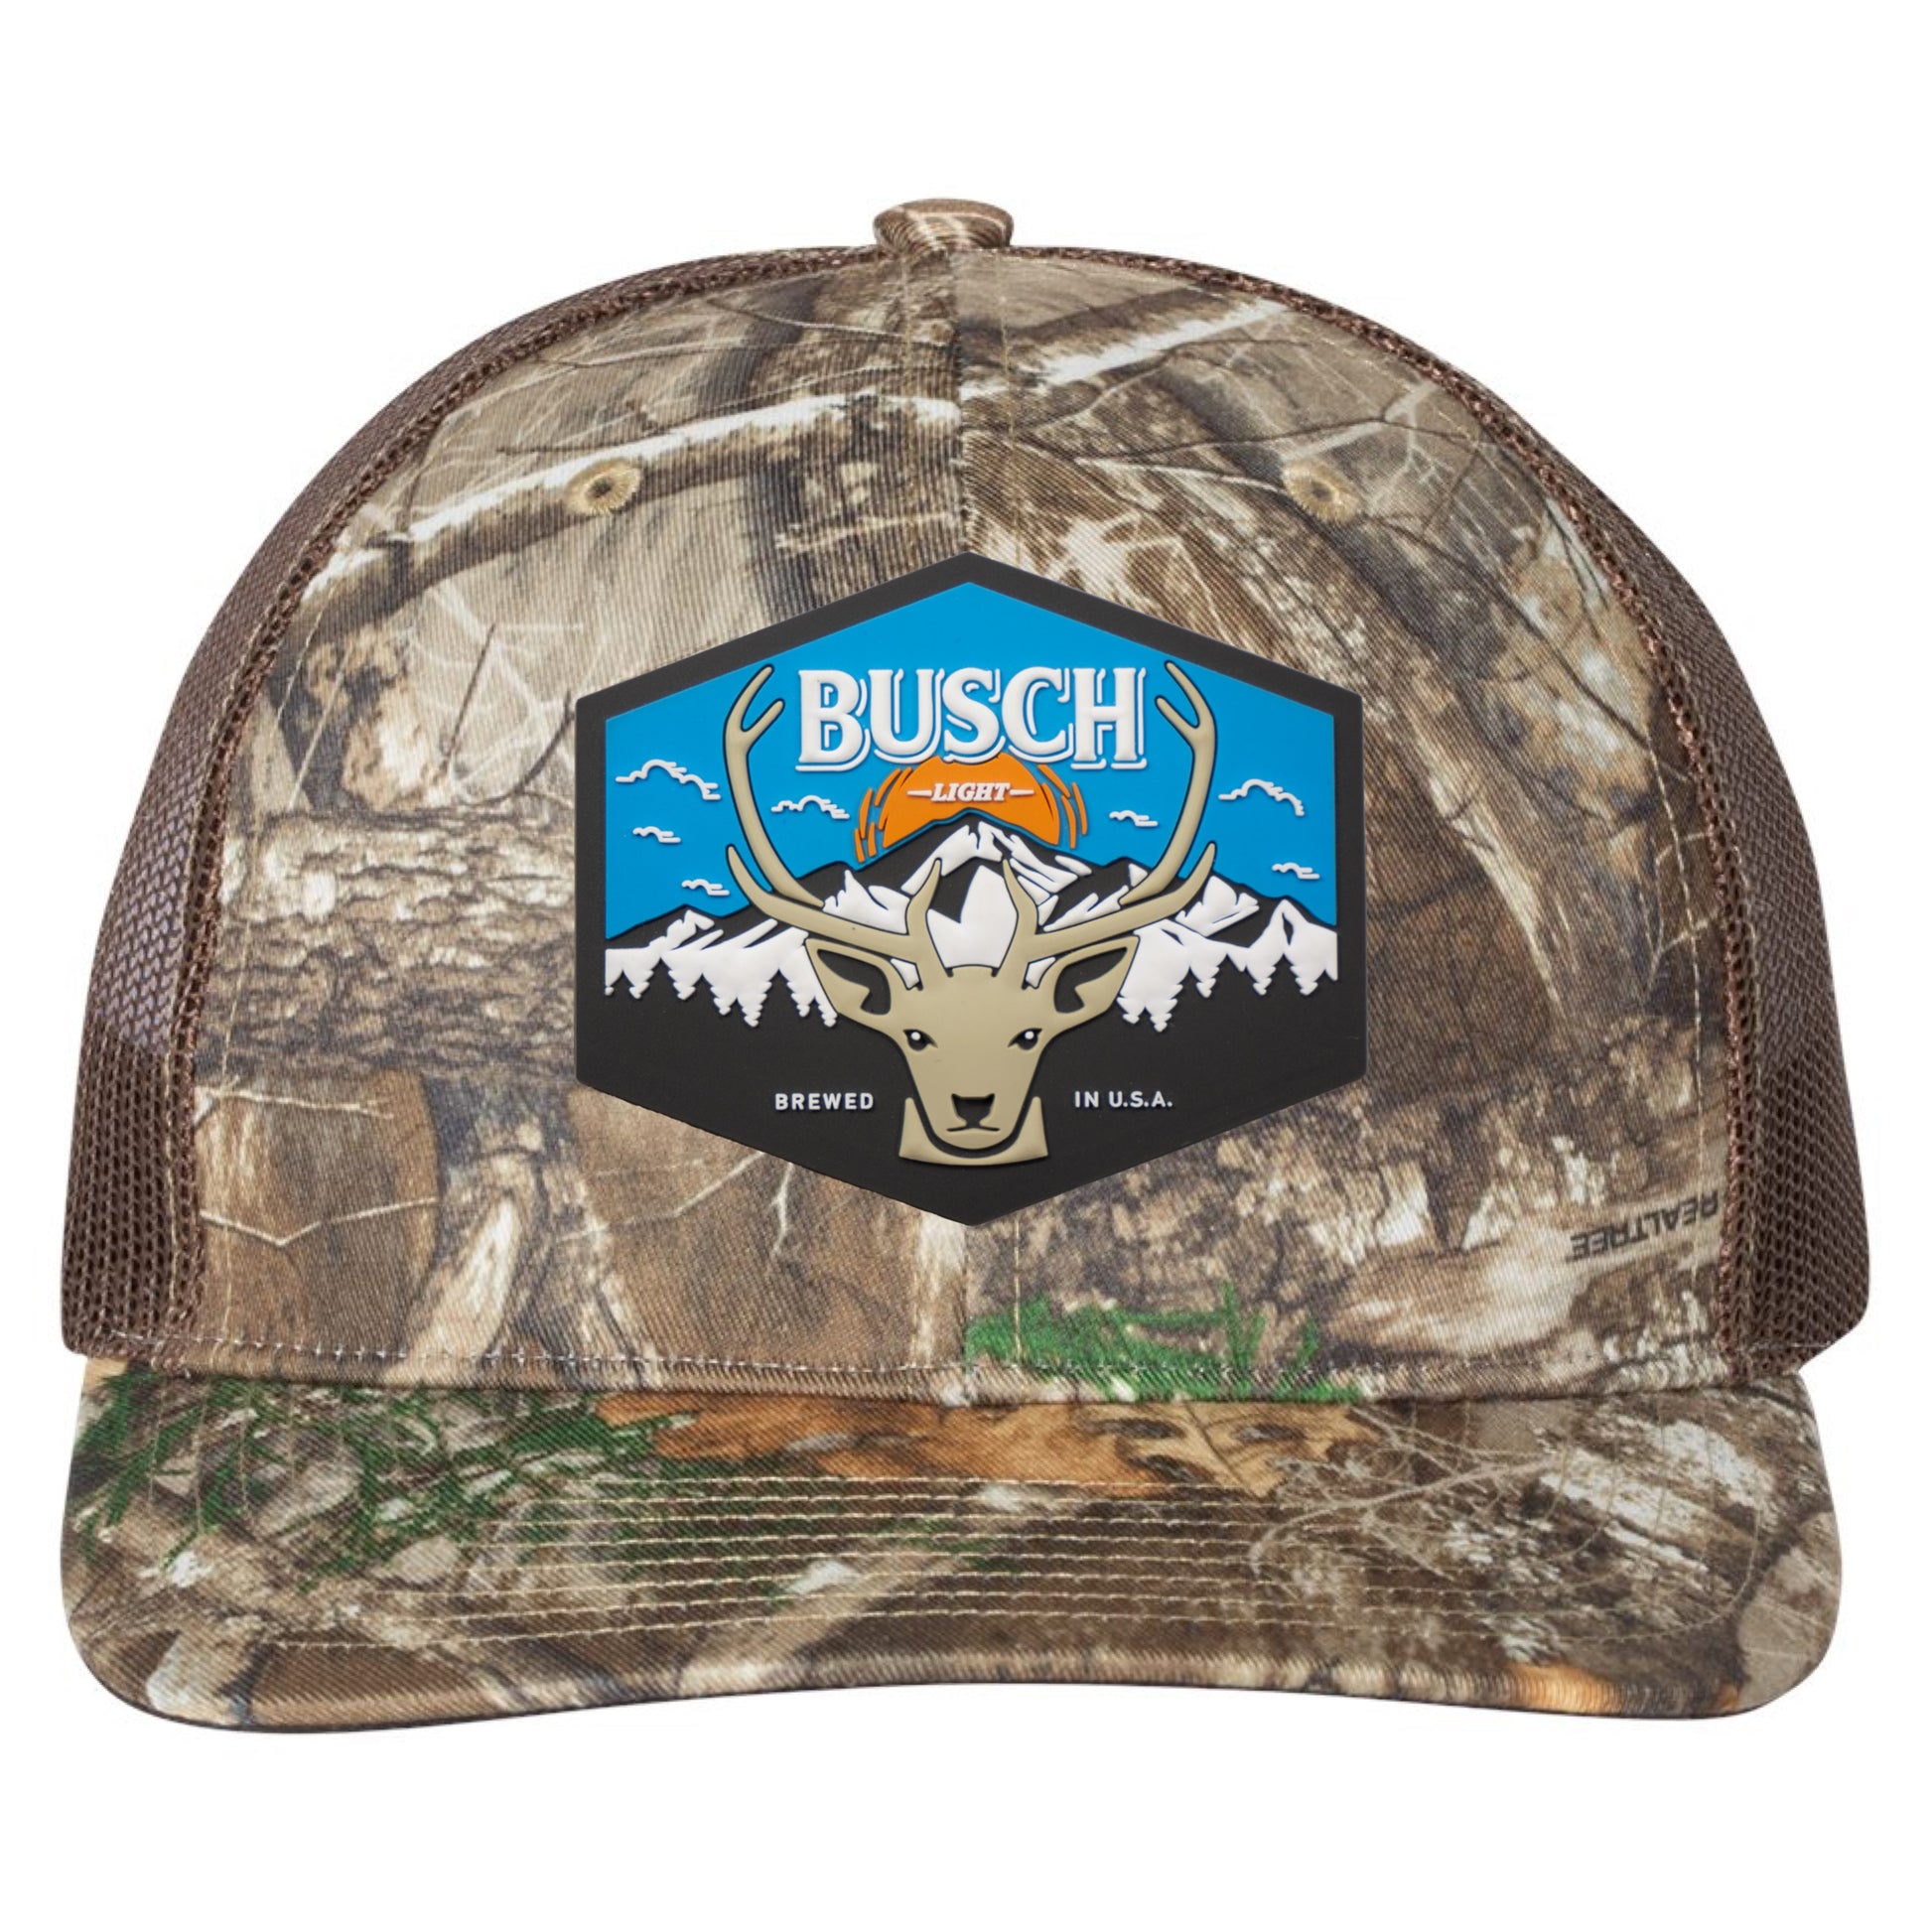 Busch Light Mountain Escape 3D Patterned Snapback Trucker Hat- Realtree Edge/ Brown - Ten Gallon Hat Co.